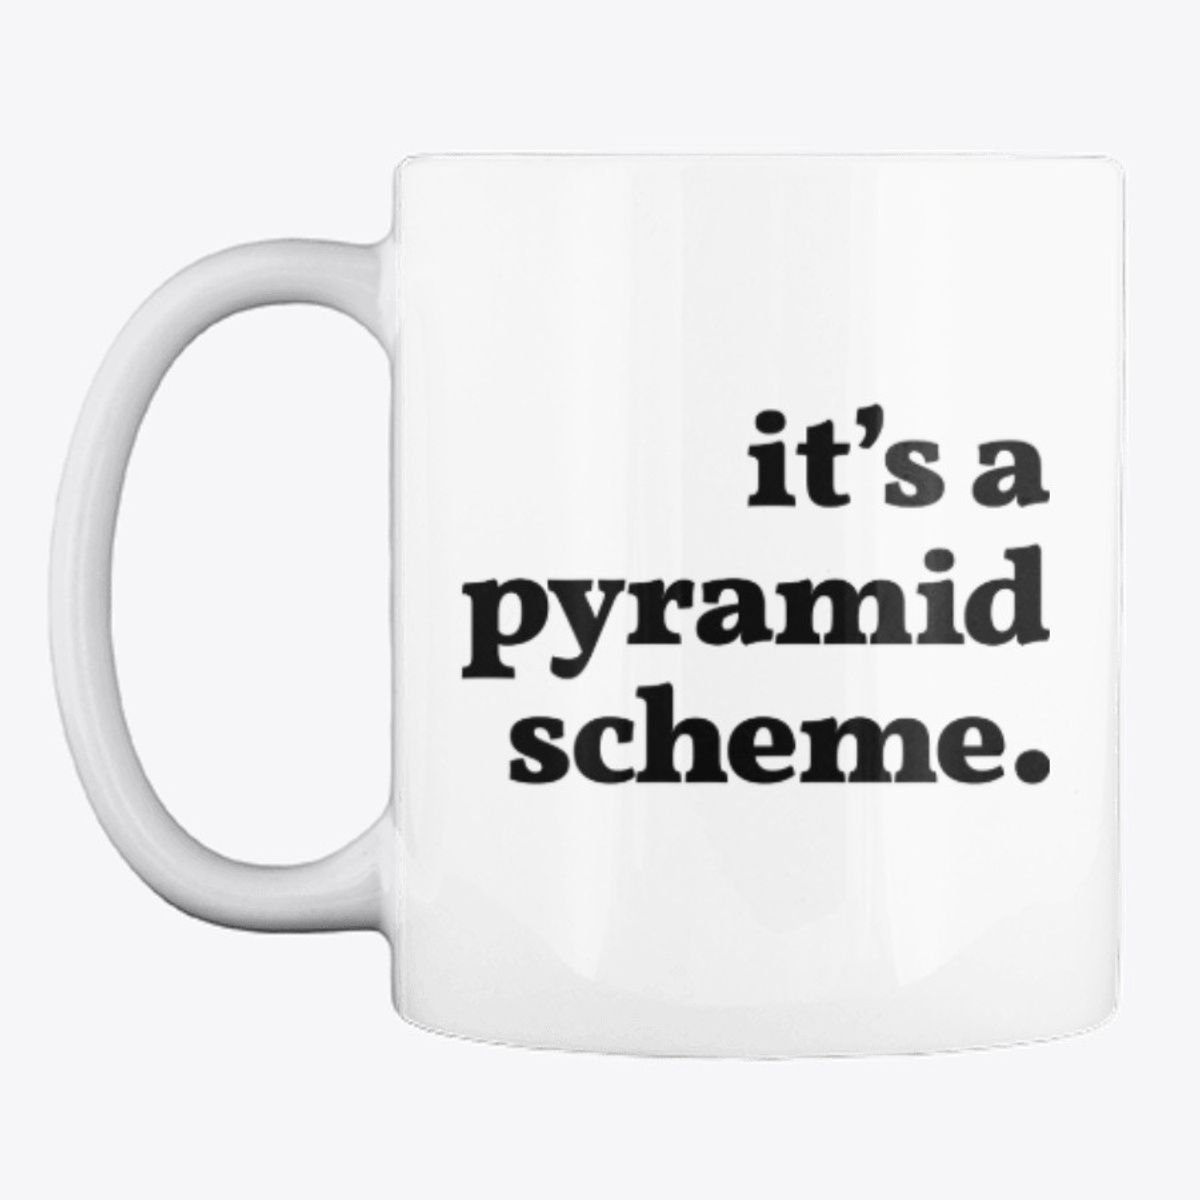 münecat Pyramid Scheme mug | münecat store